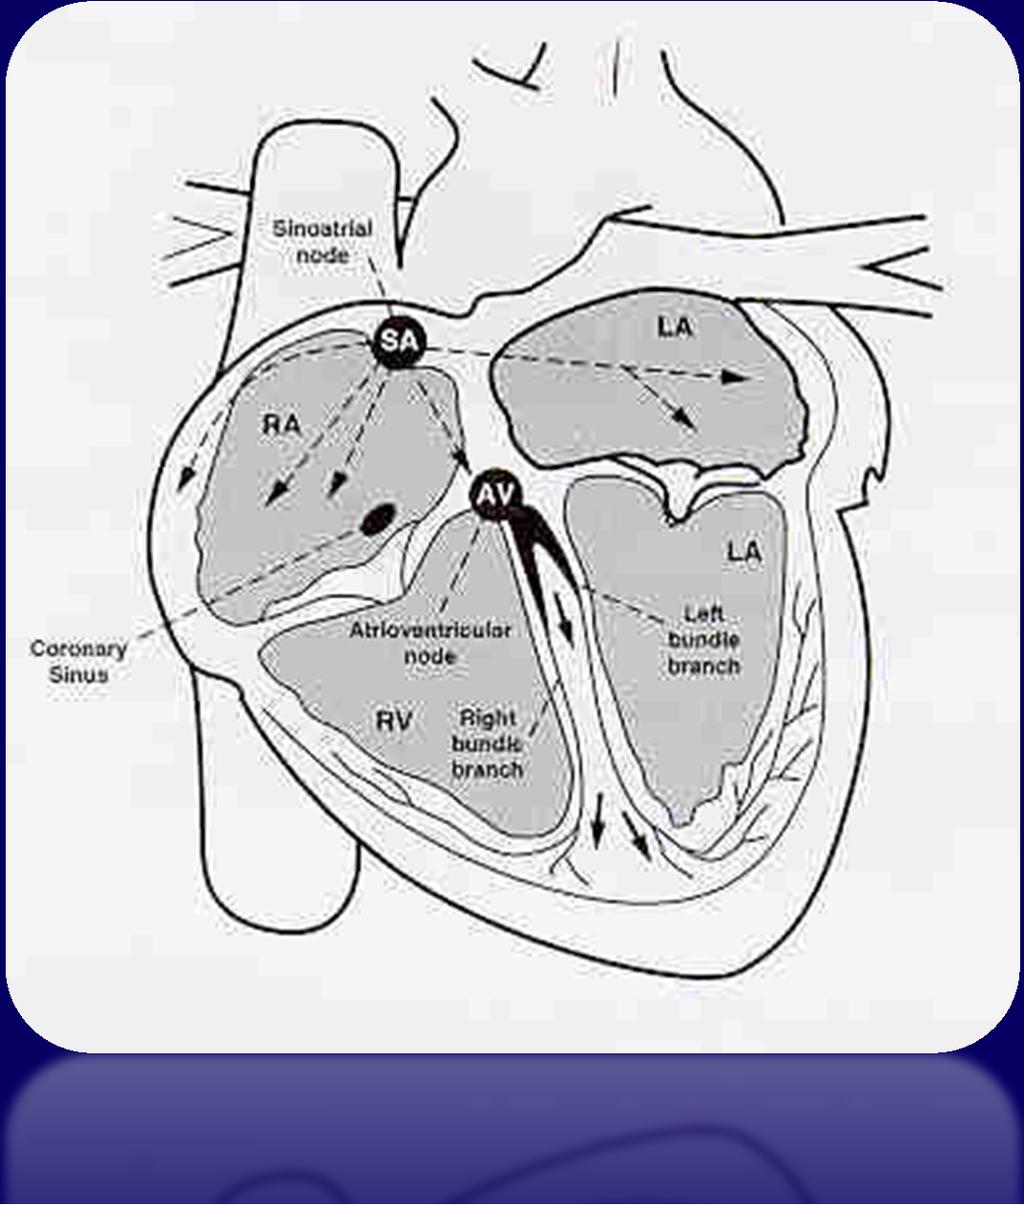 AVRT vs AVNRT AVRT: Atrio-Ventricular Re-entrant Tachycardia Accessory Pathway